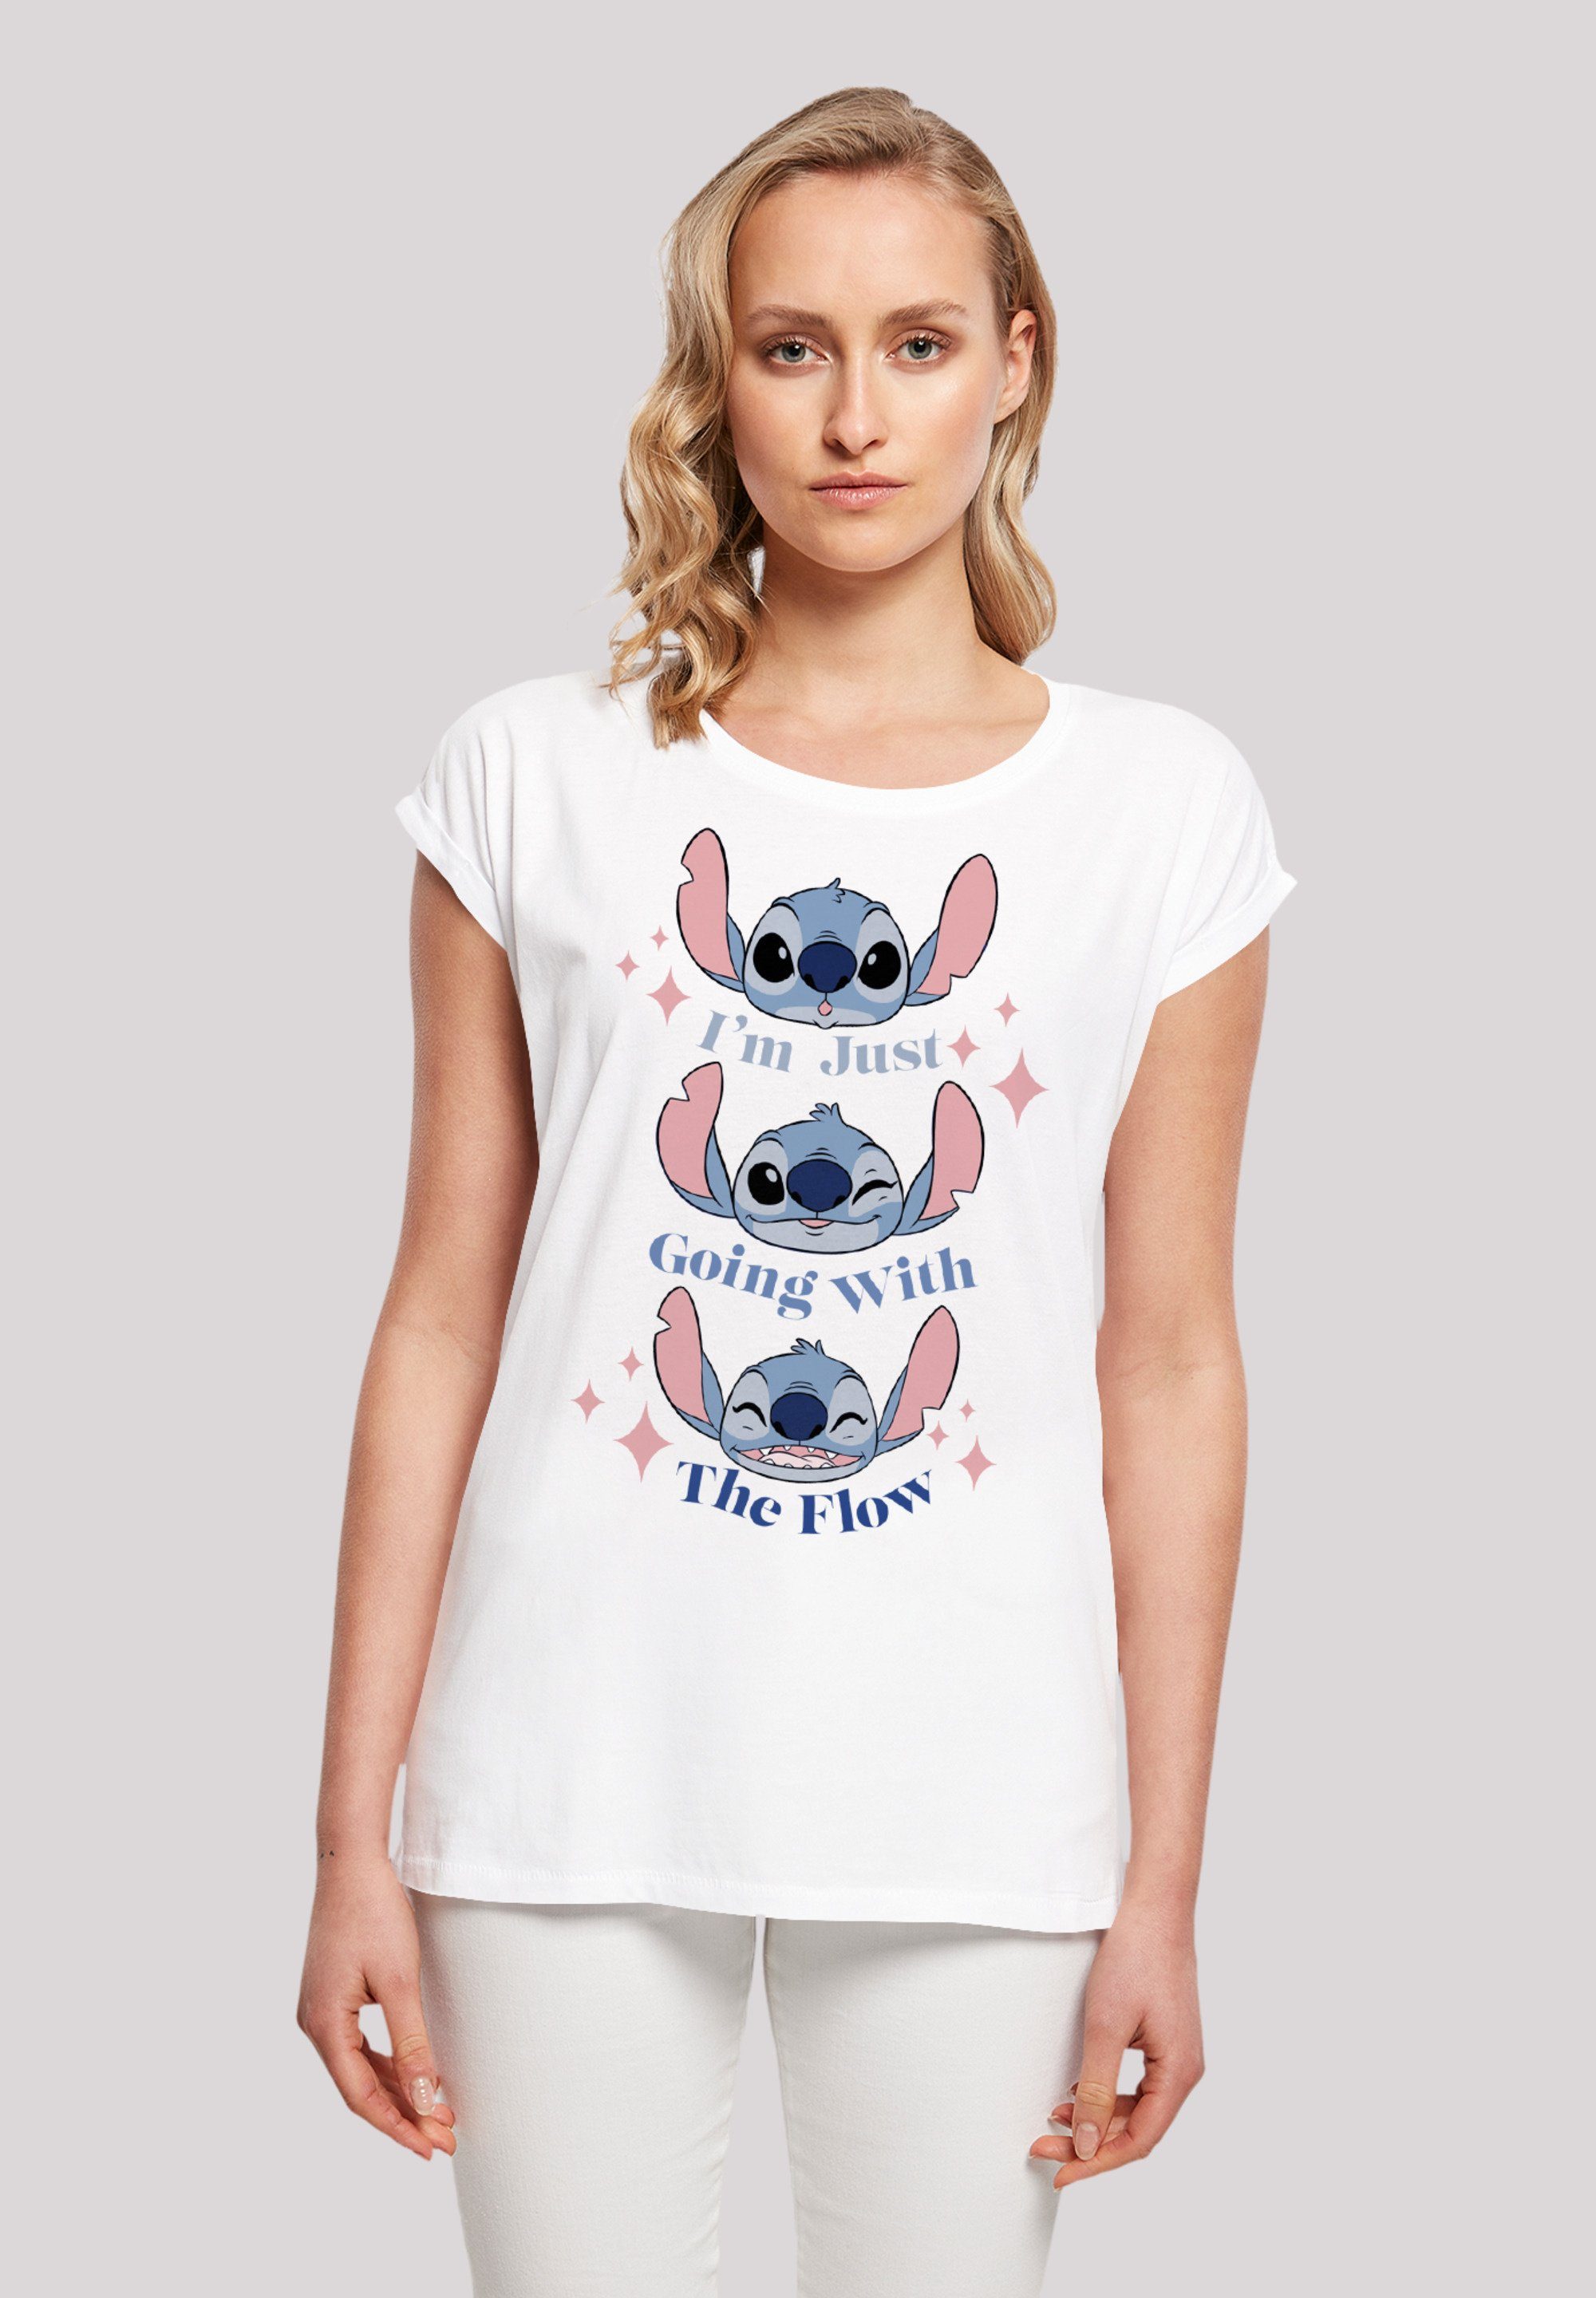 F4NT4STIC T-Shirt Disney Stitch Qualität Flow Lilo The & Going With Premium